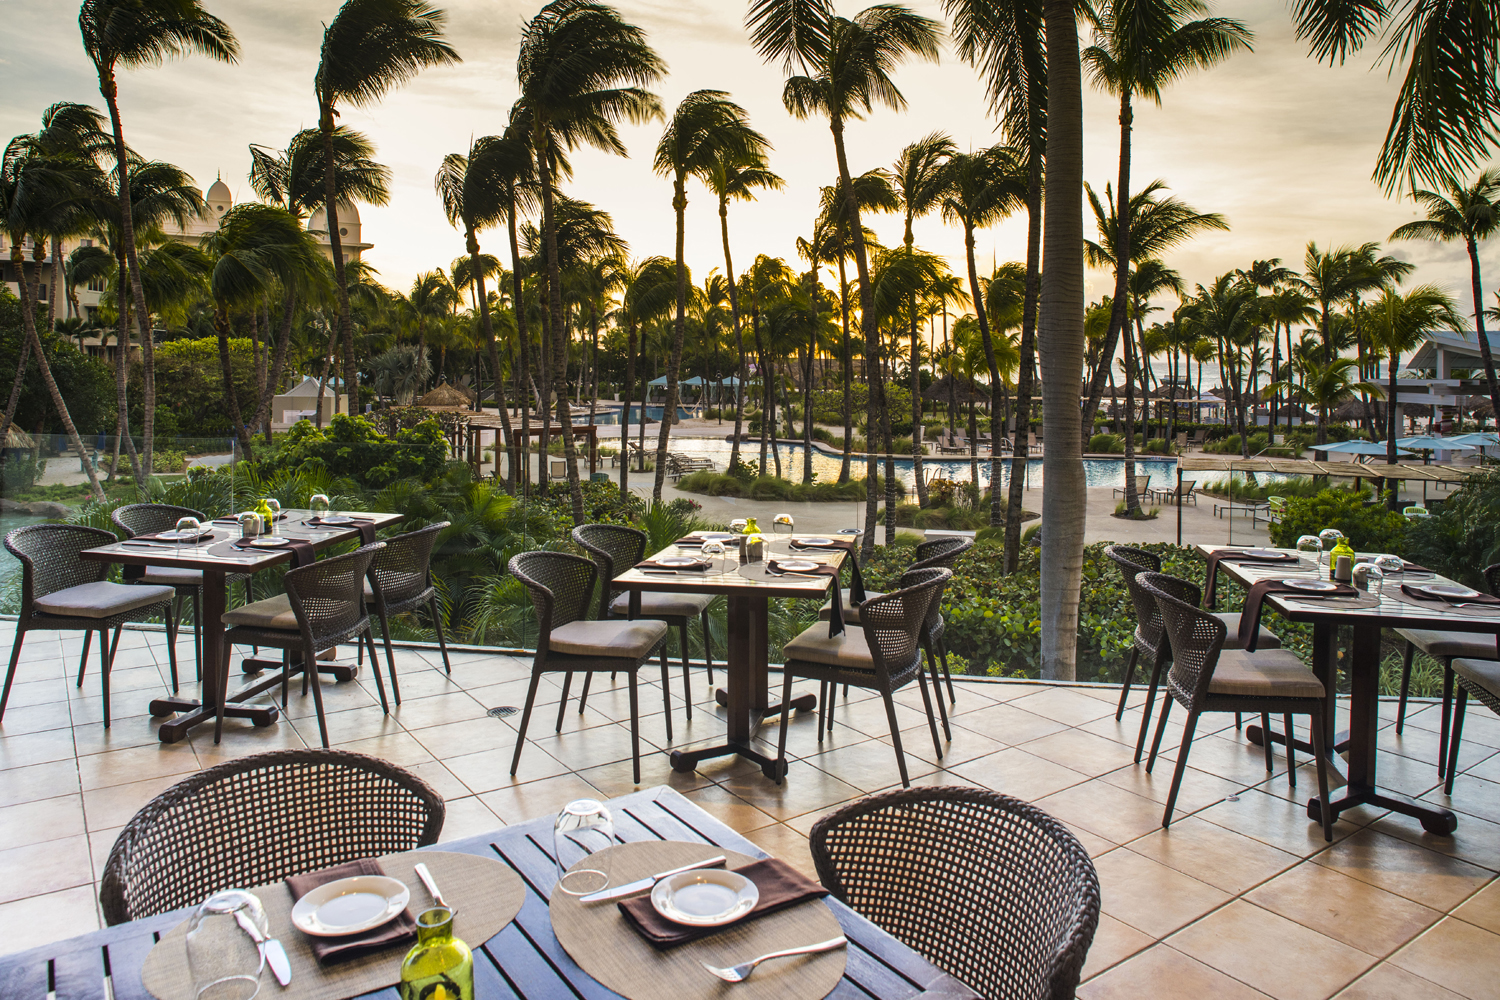 Open-air dining at the Hilton Aruba.